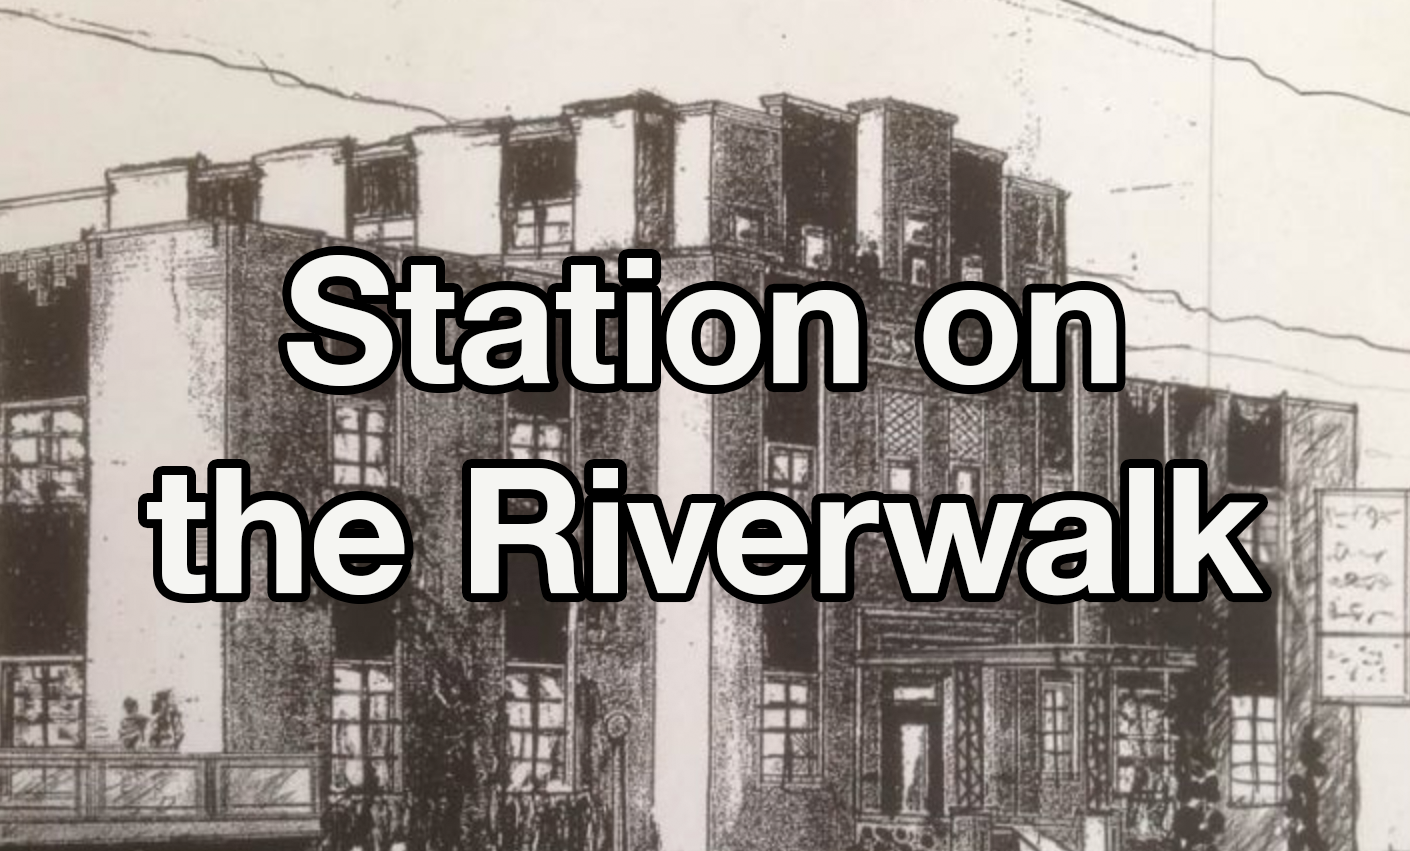 Station on the Riverwalk